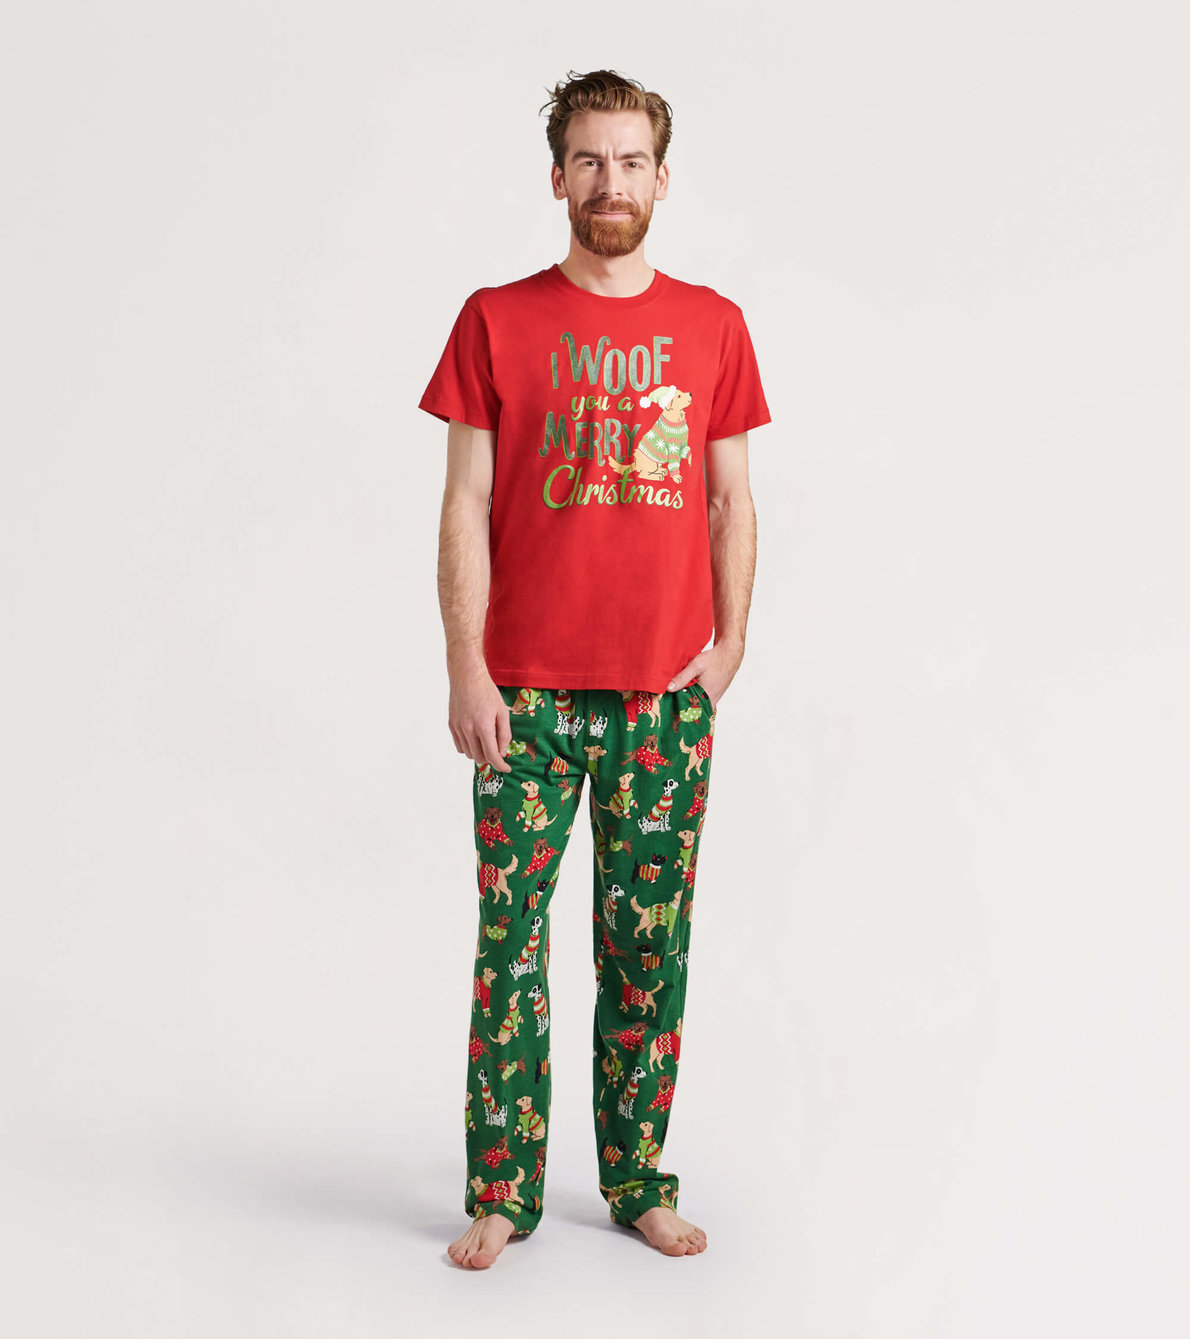 View larger image of Men's Woofing Christmas Pajama Pants